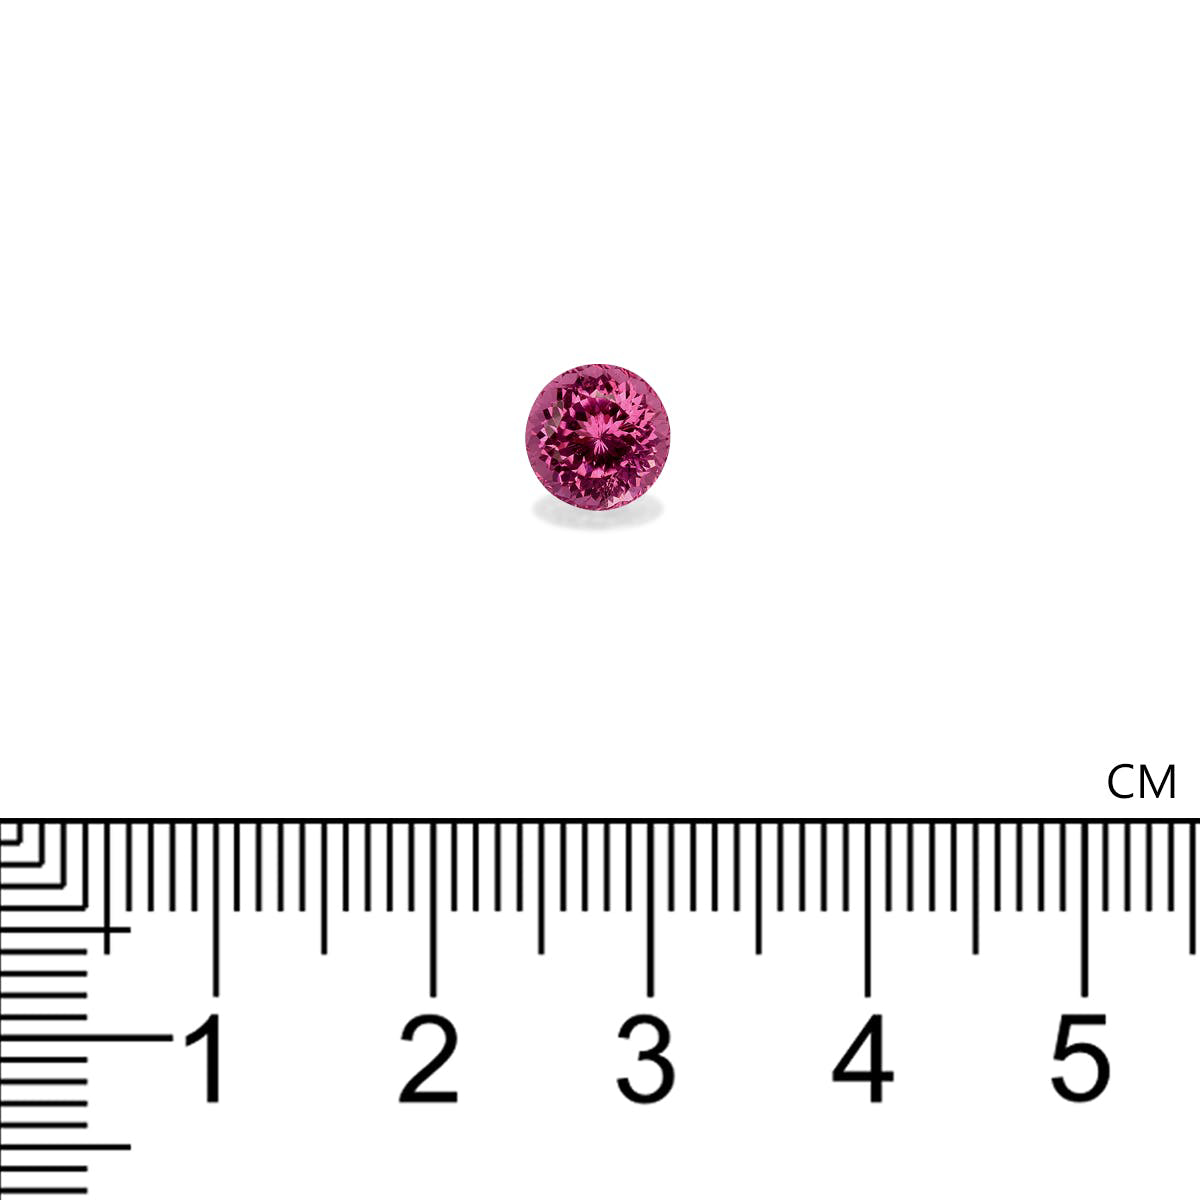 Picture of Fuscia Pink Rubellite Tourmaline 1.31ct - 6mm (RL1253)